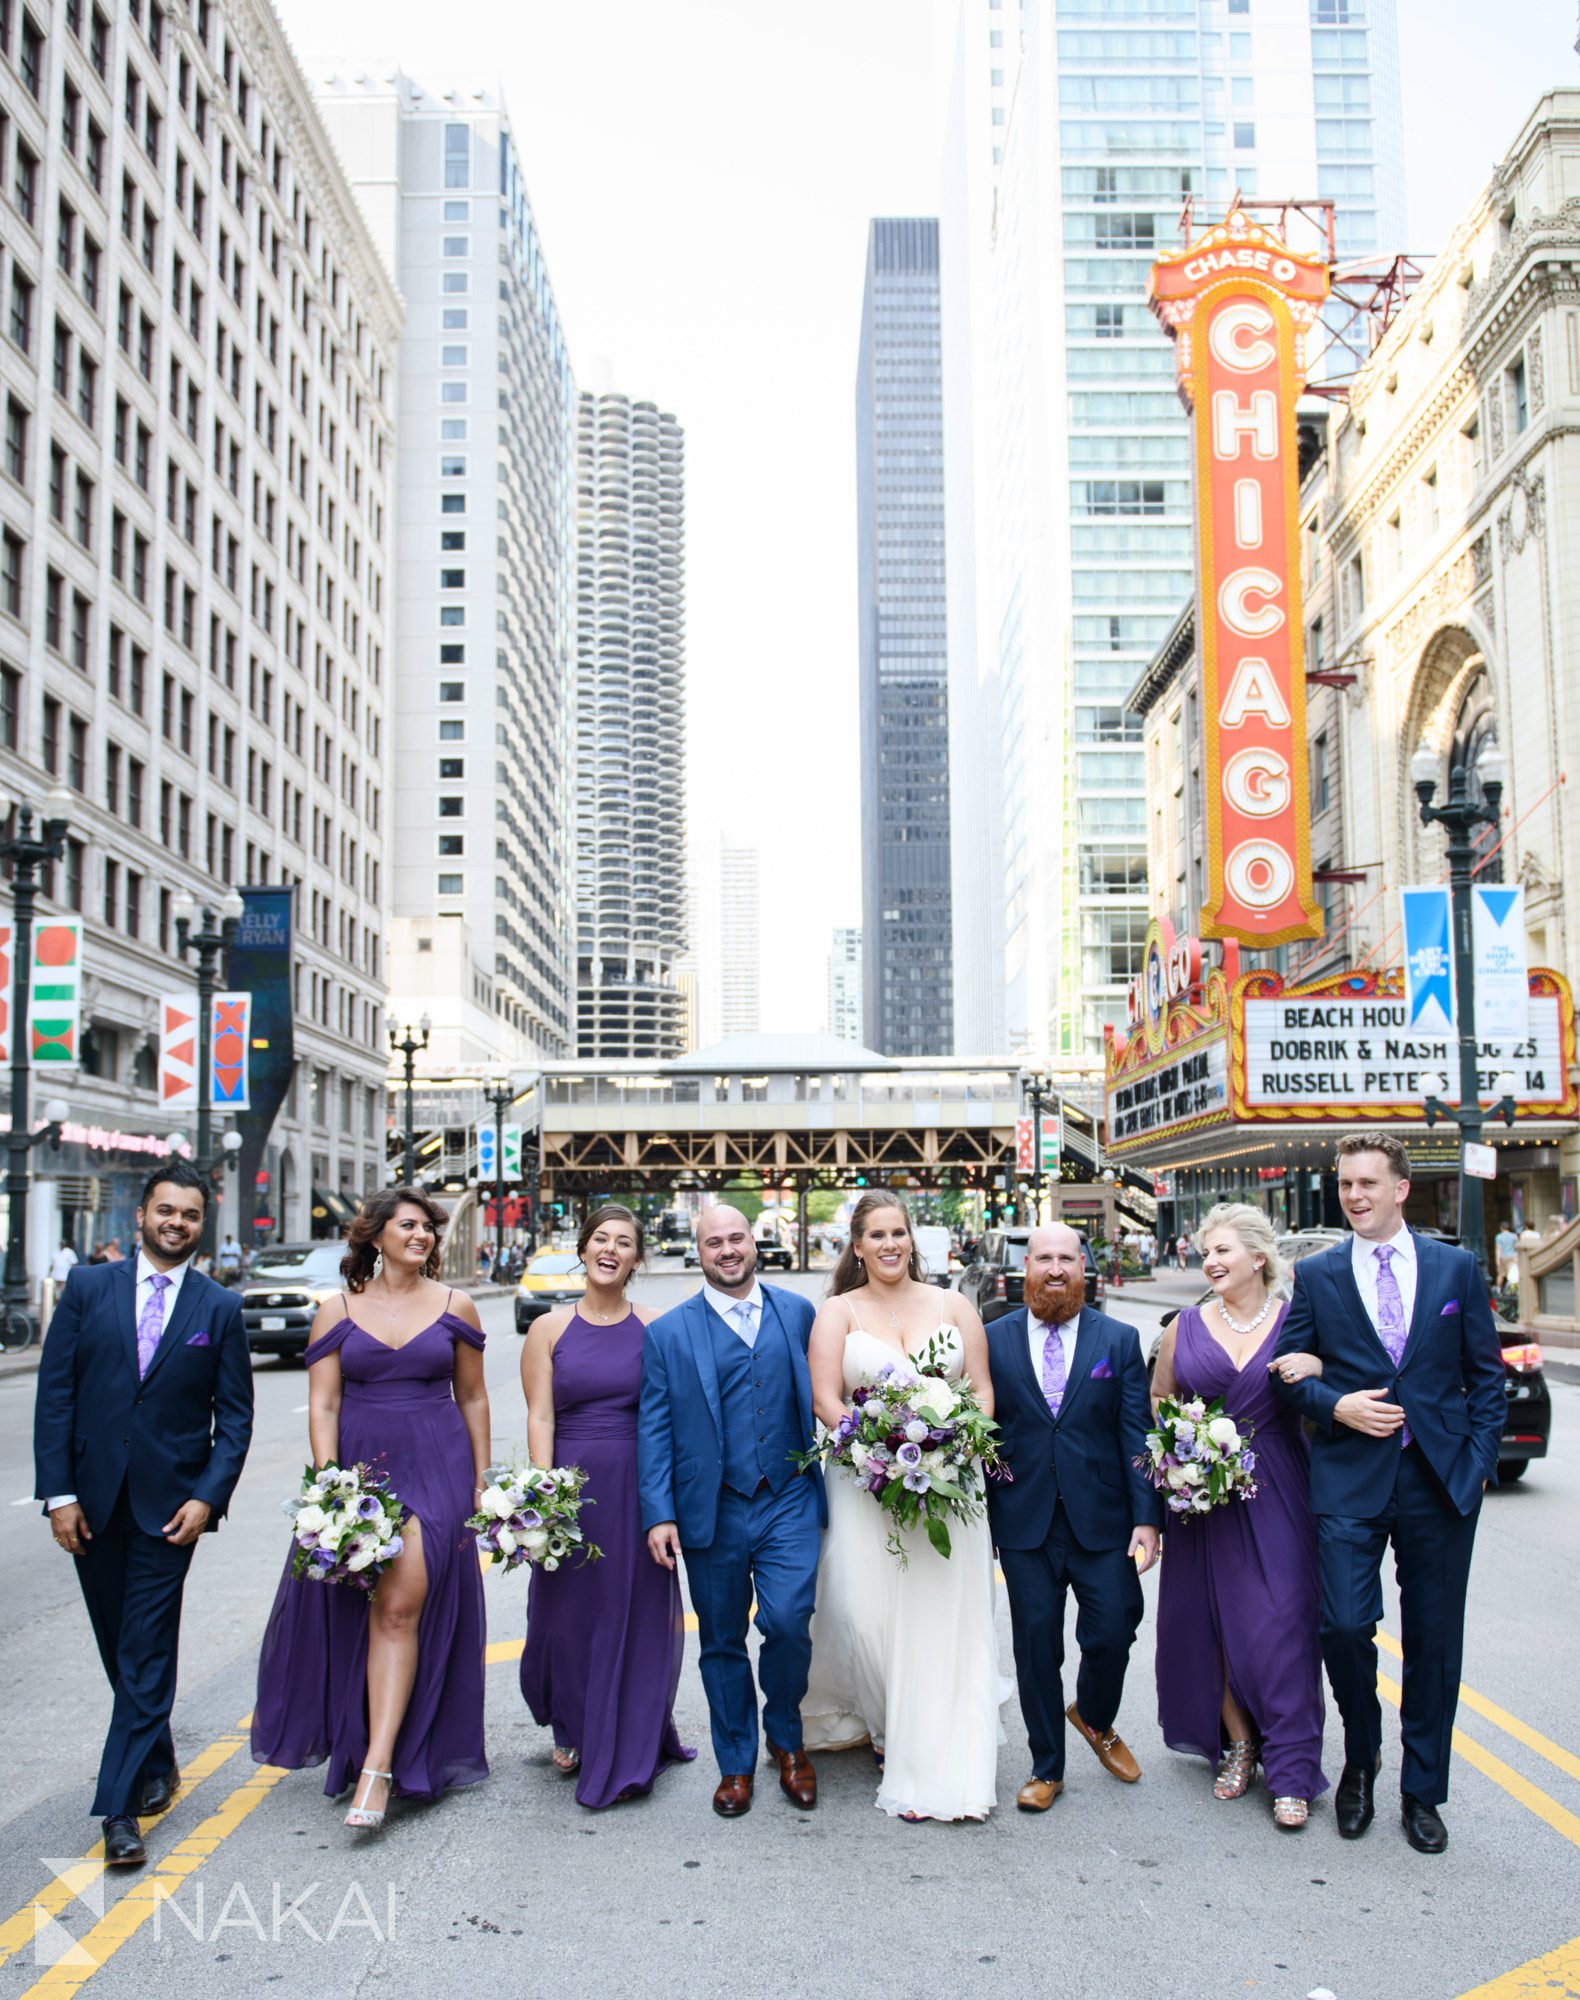 Chicago theatre sign wedding photos bridal party